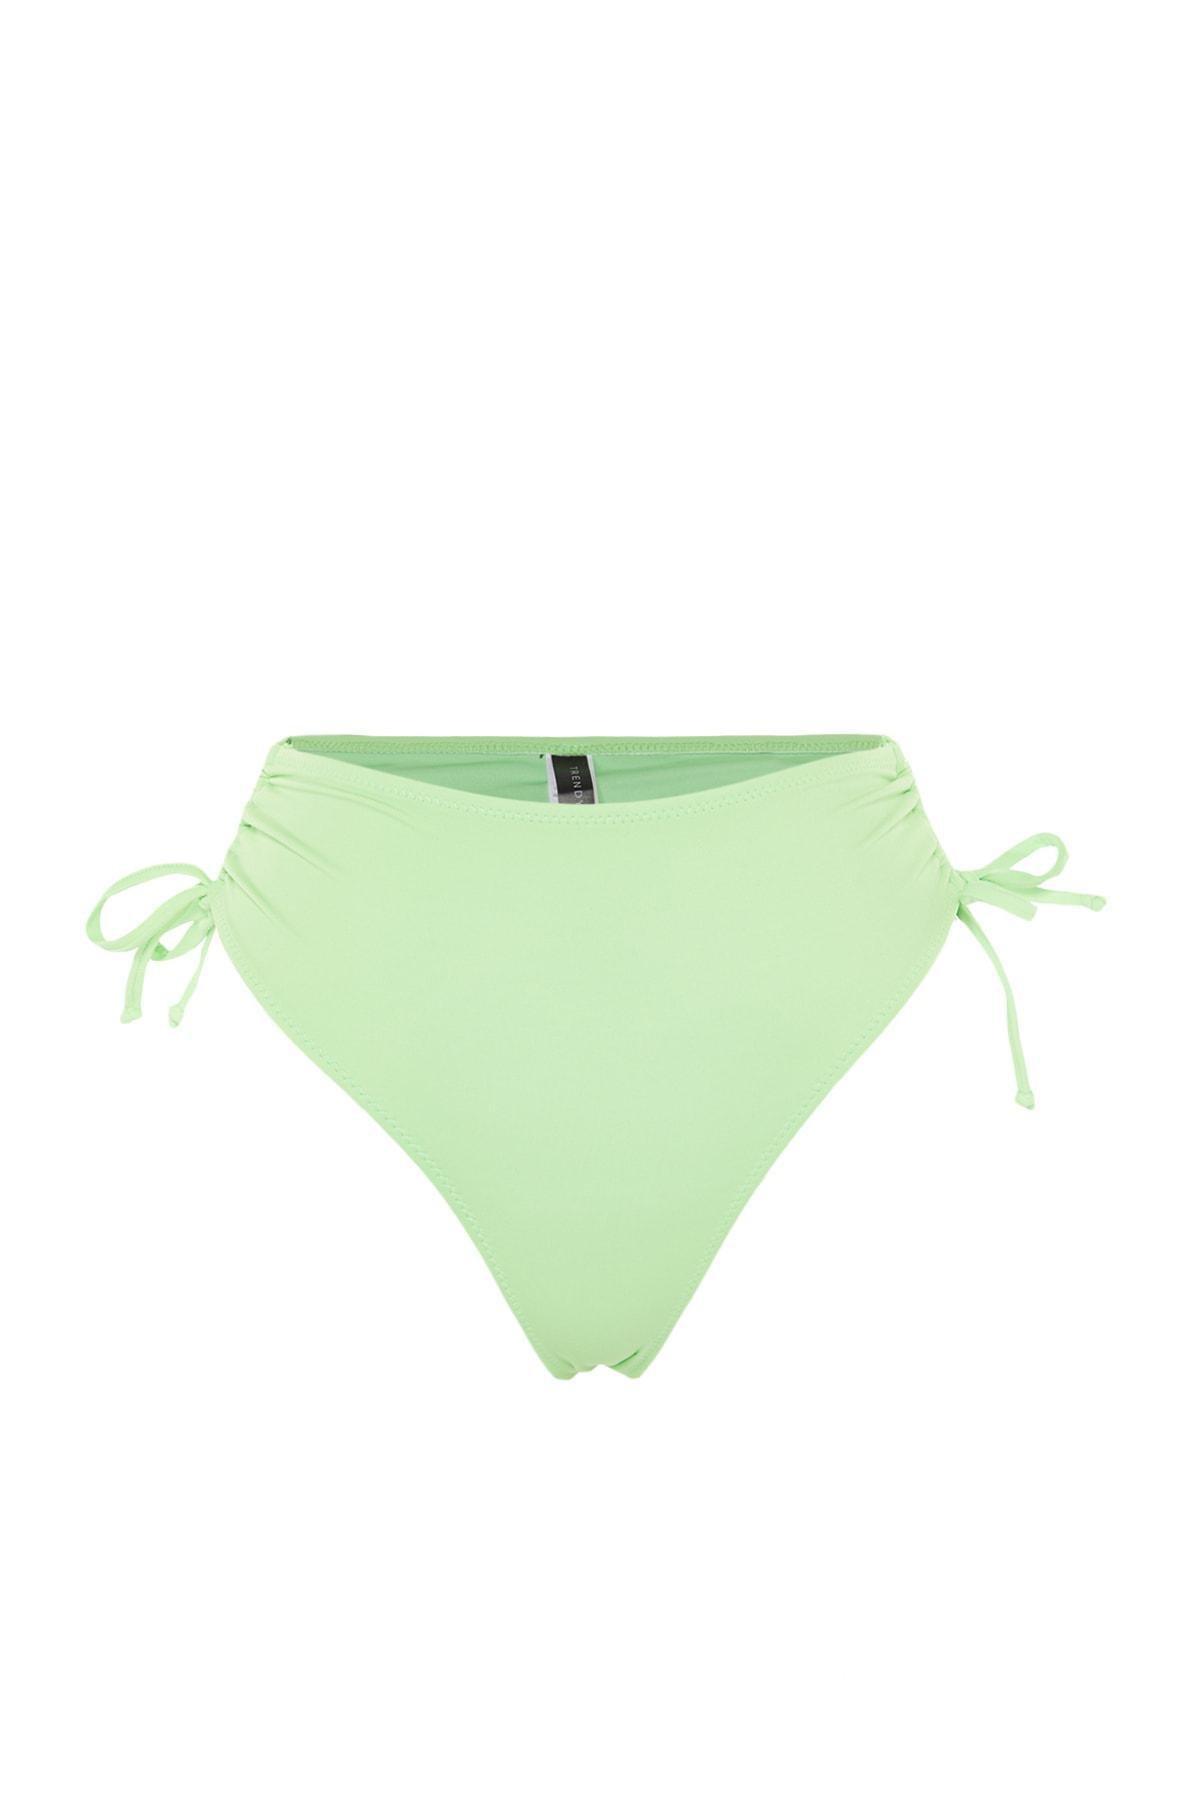 Trendyol - Green Ruffle Bikini Bottom